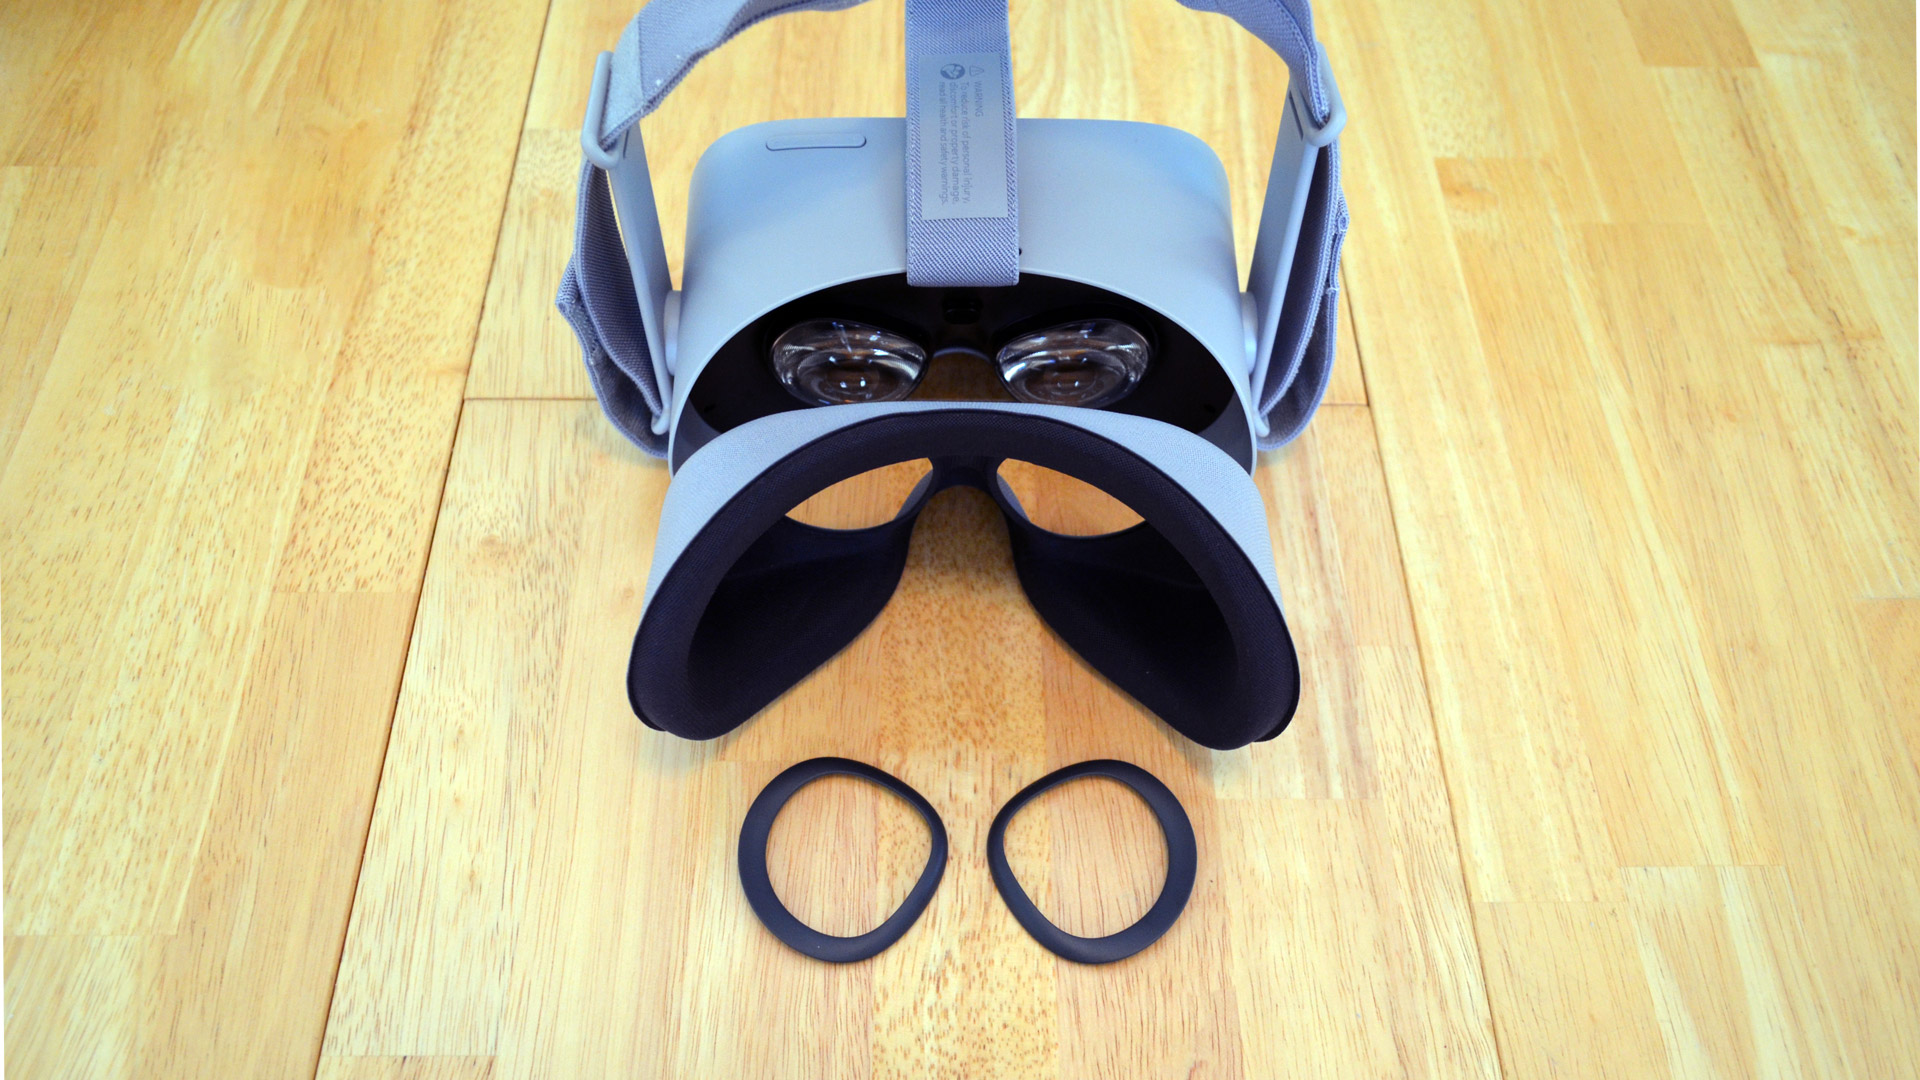 oculus go vr gaming headset